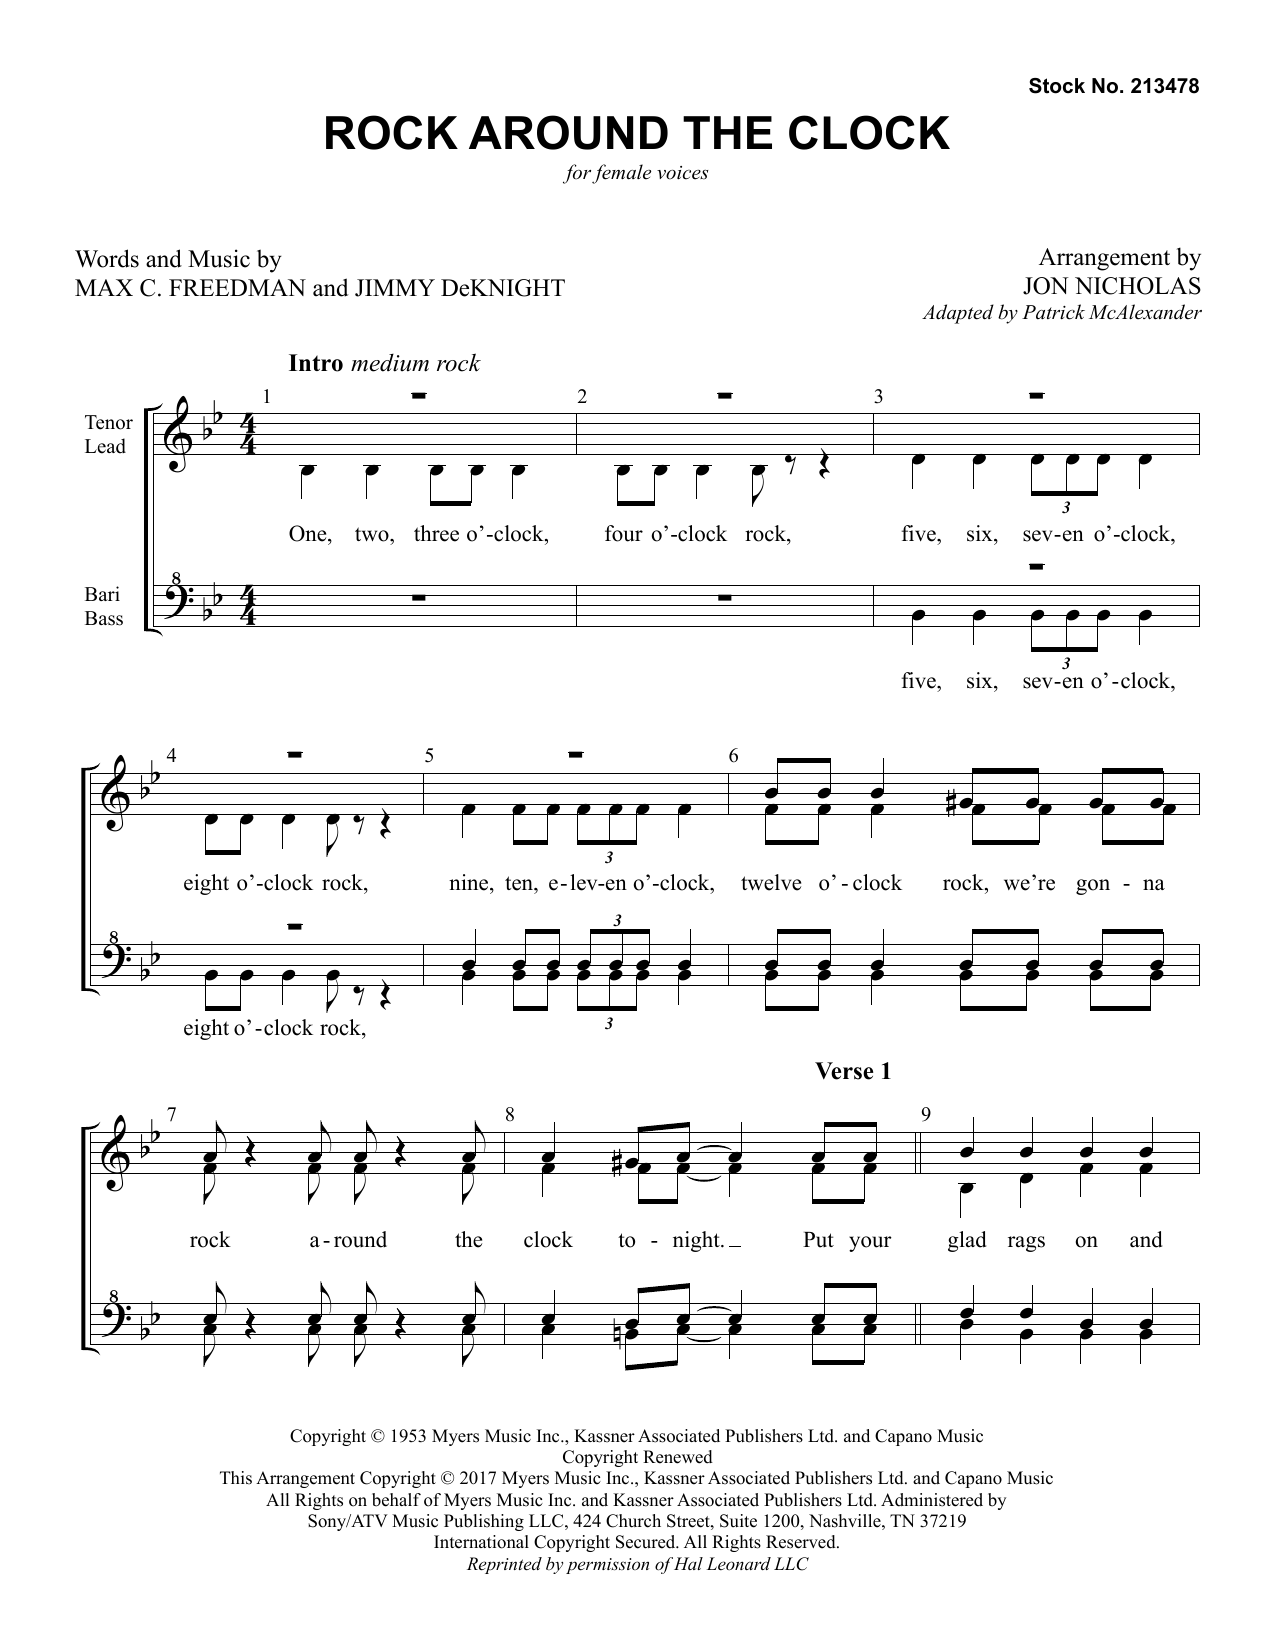 Max C. Freedman & Jimmy DeKnight Rock Around The Clock (arr. Jon Nicholas) Sheet Music Notes & Chords for SATB Choir - Download or Print PDF